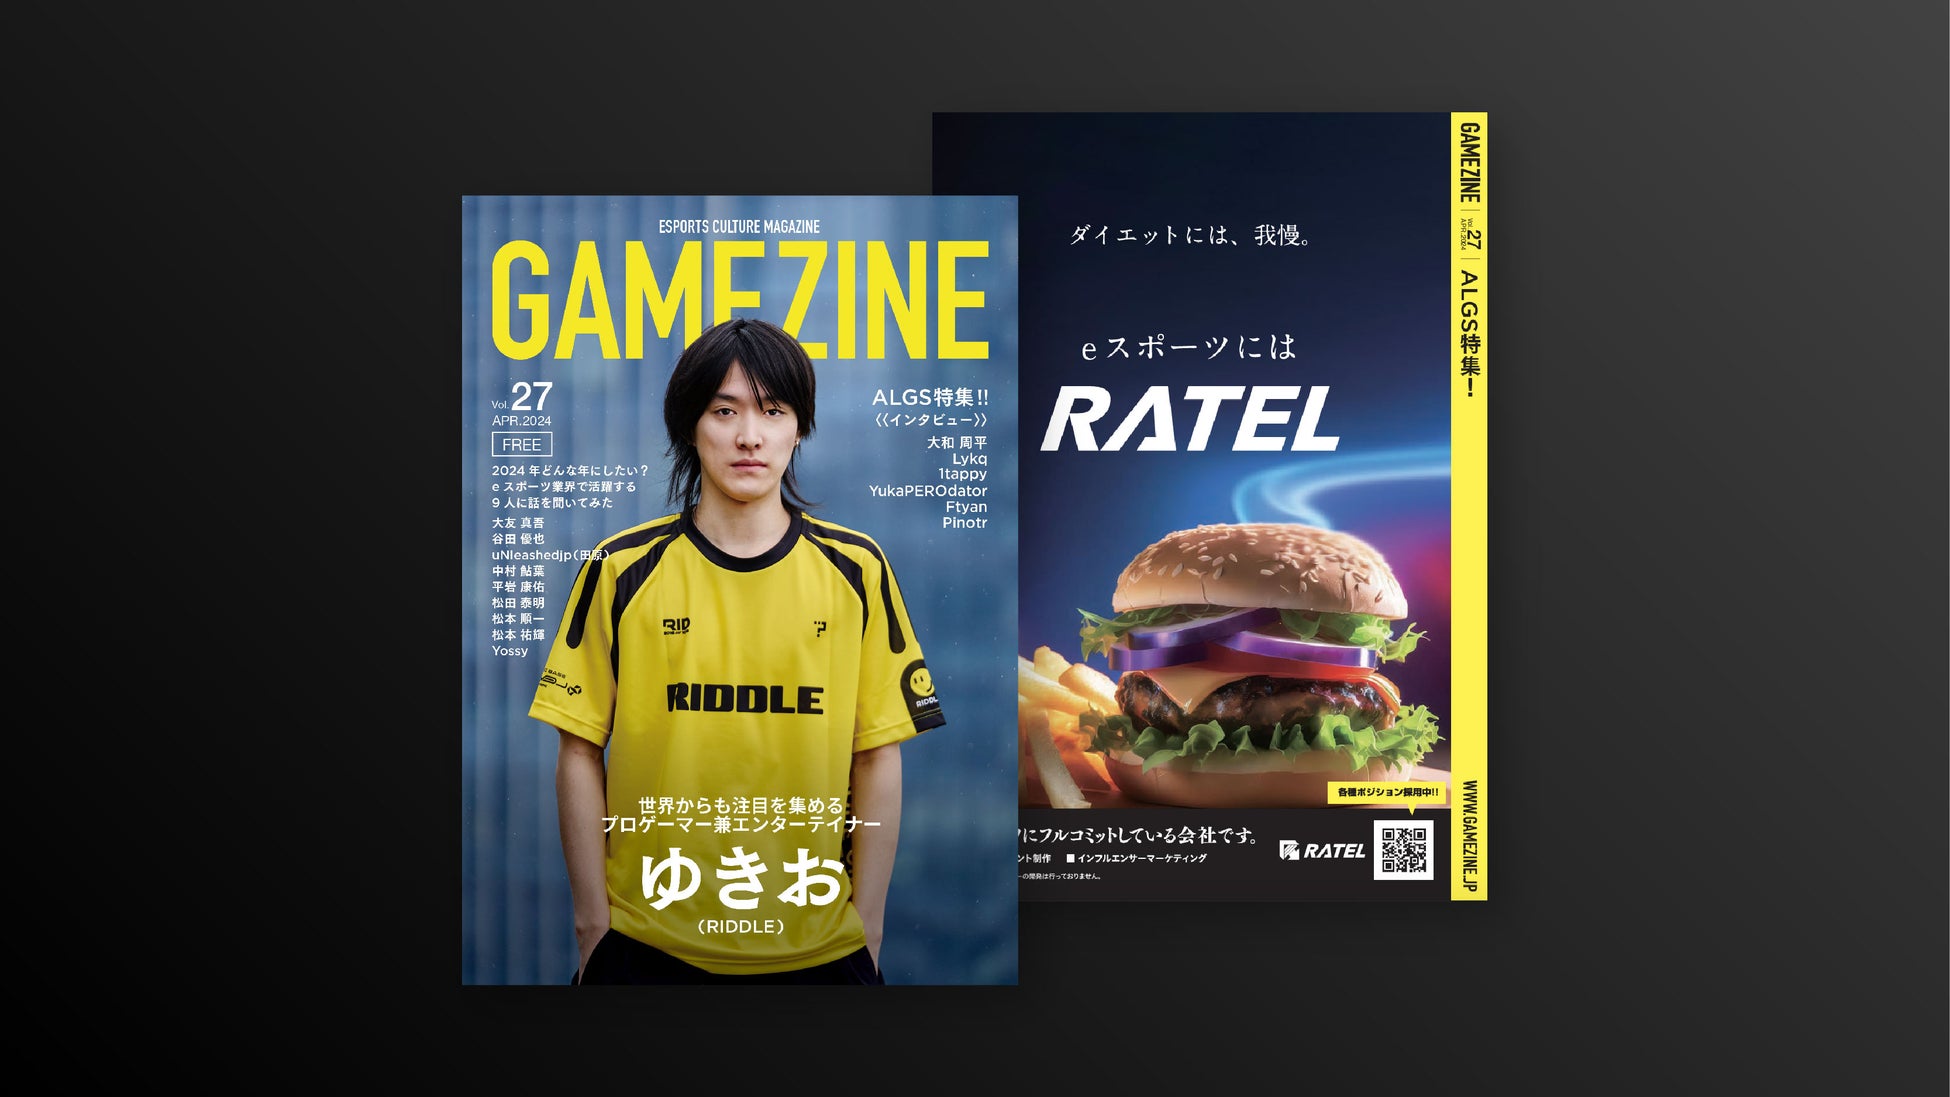 eスポーツカルチャーマガジン『GAMEZINE Vol.27』にRATELの広告が掲載。